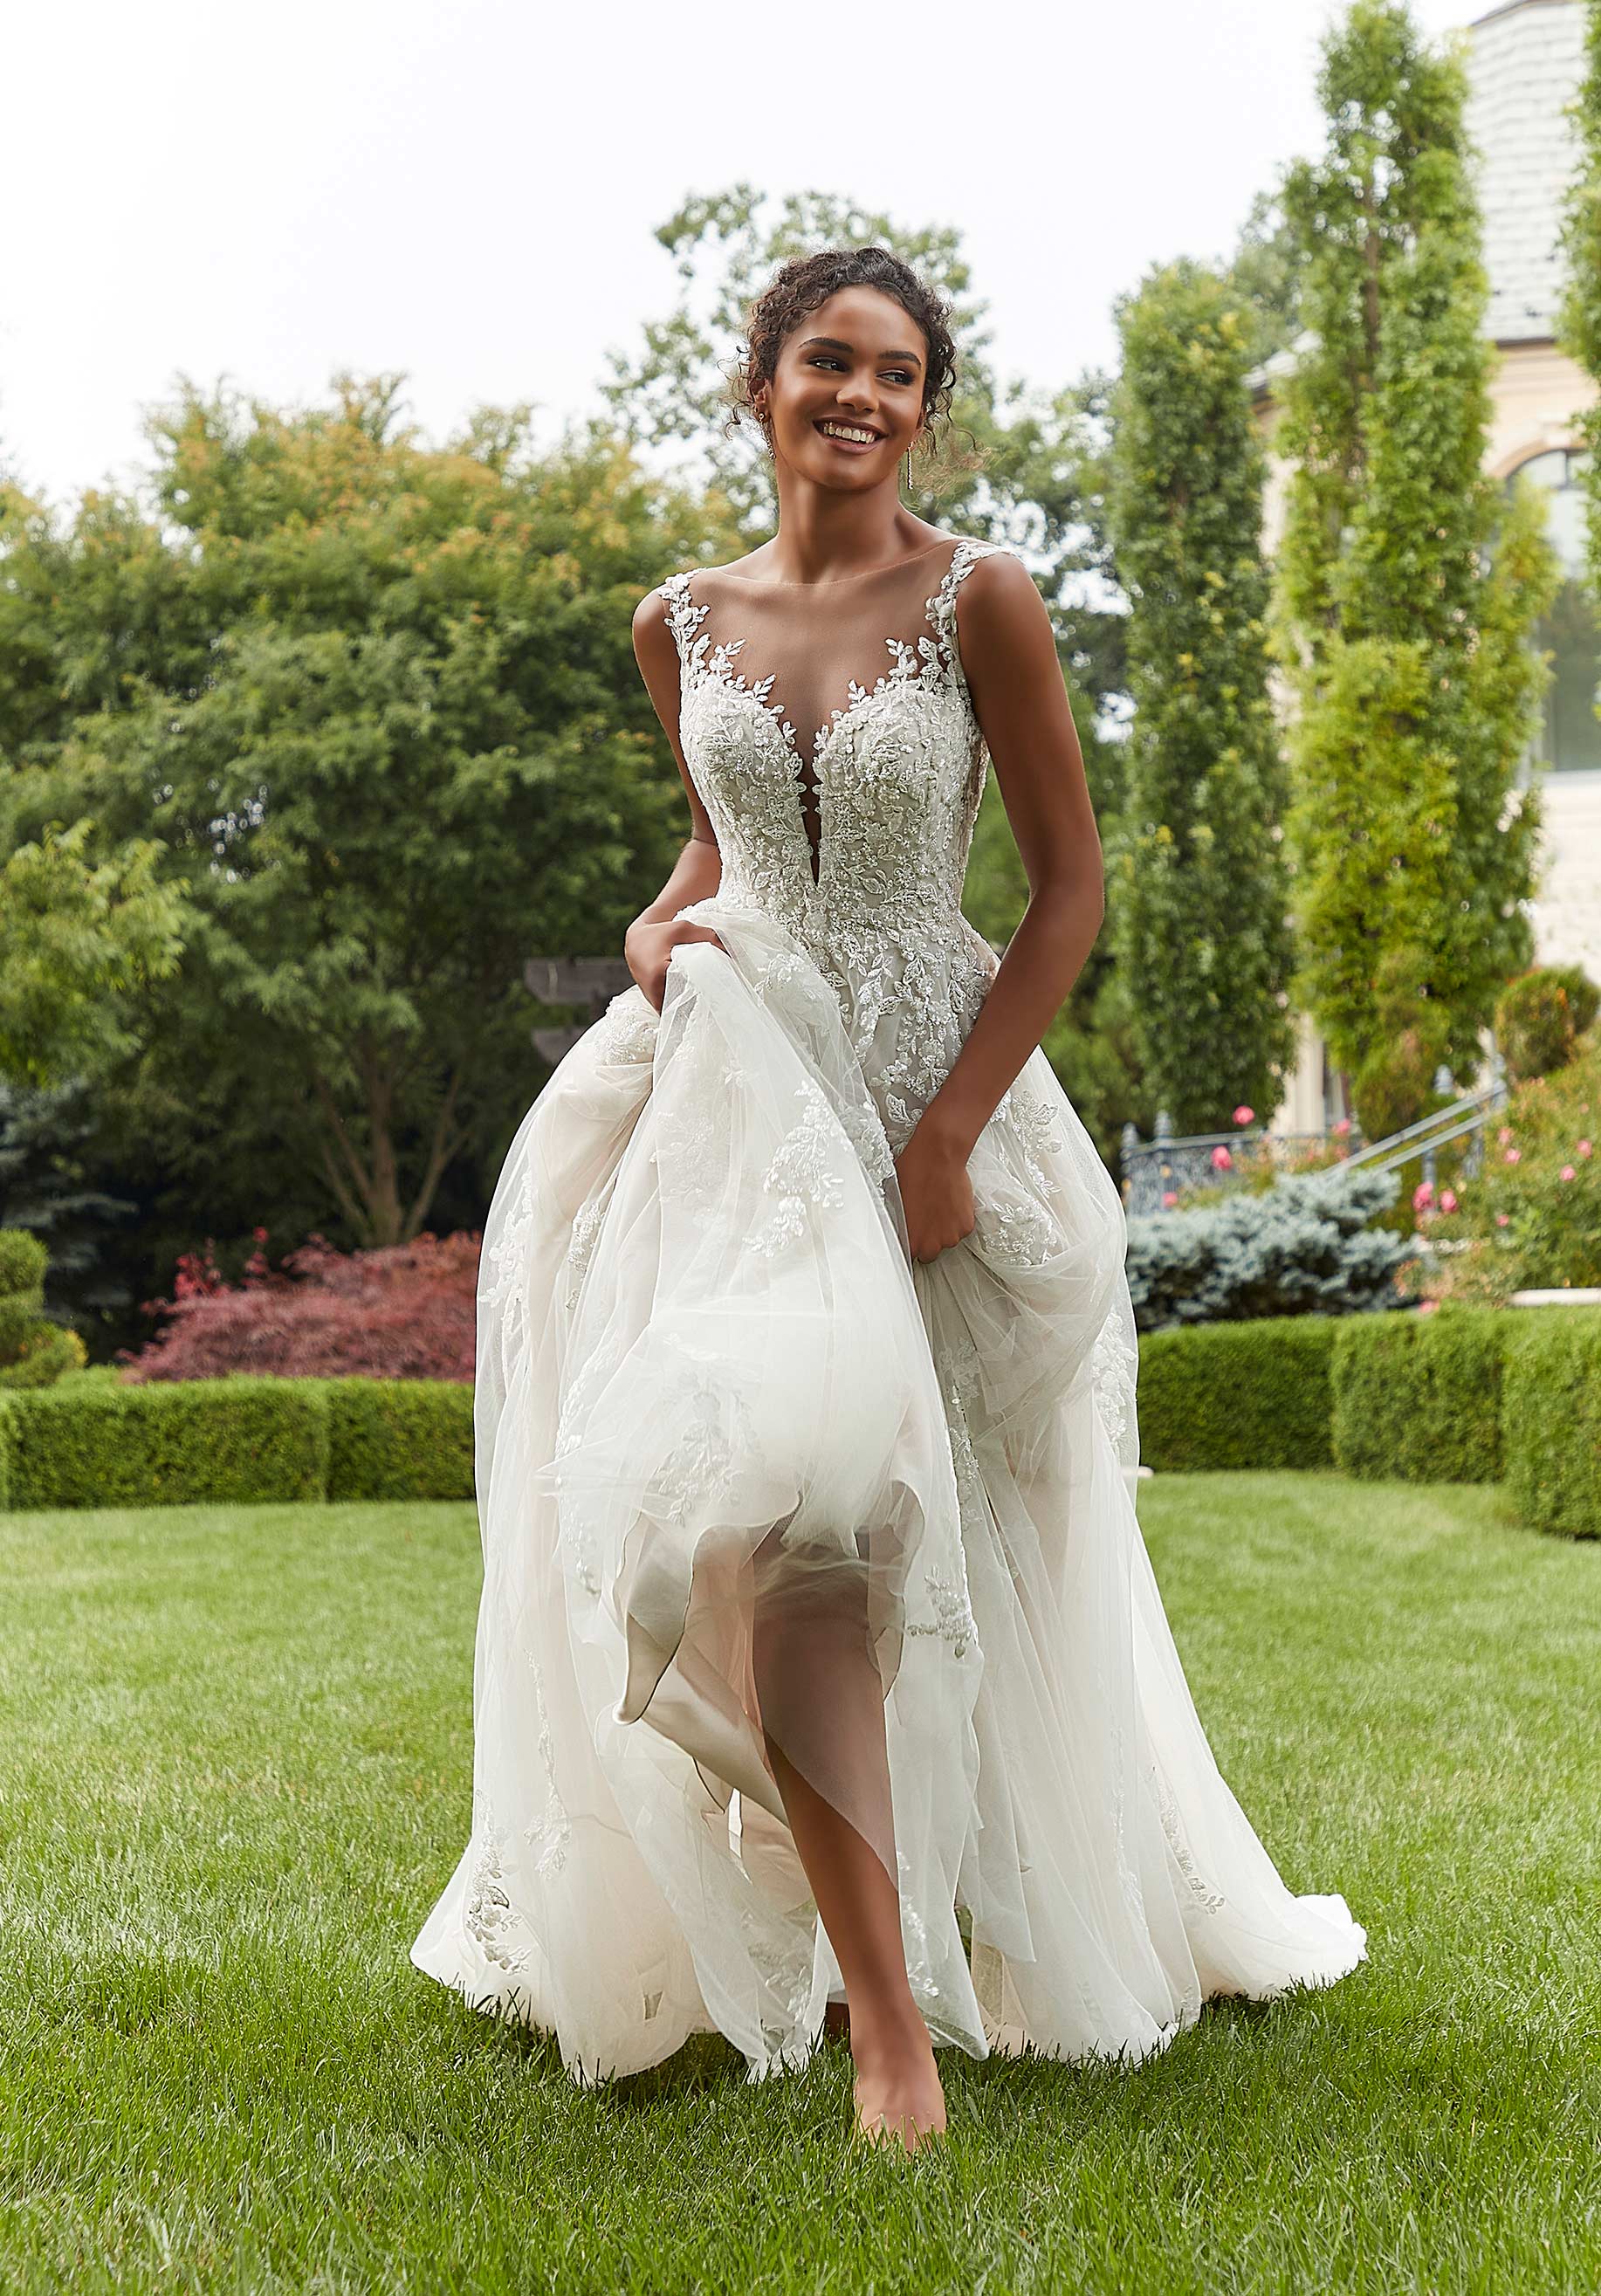 5 Flattering Wedding Dress Styles For Petite Brides – MyChicDress